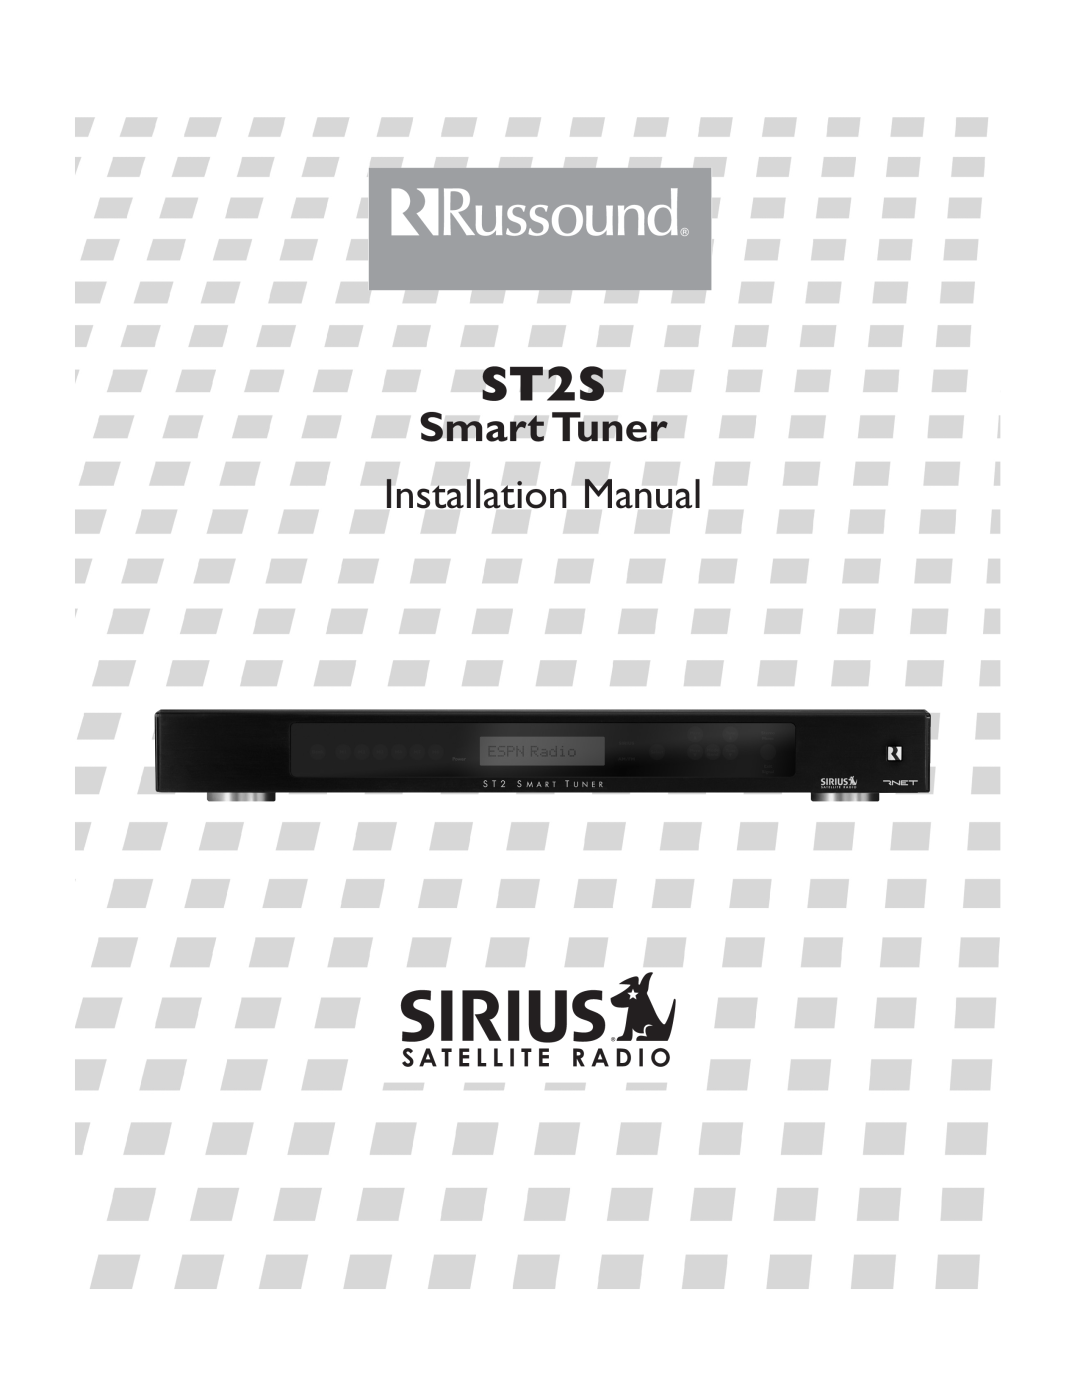 Russound ST2S installation manual Smart Tuner, Installation Manual 